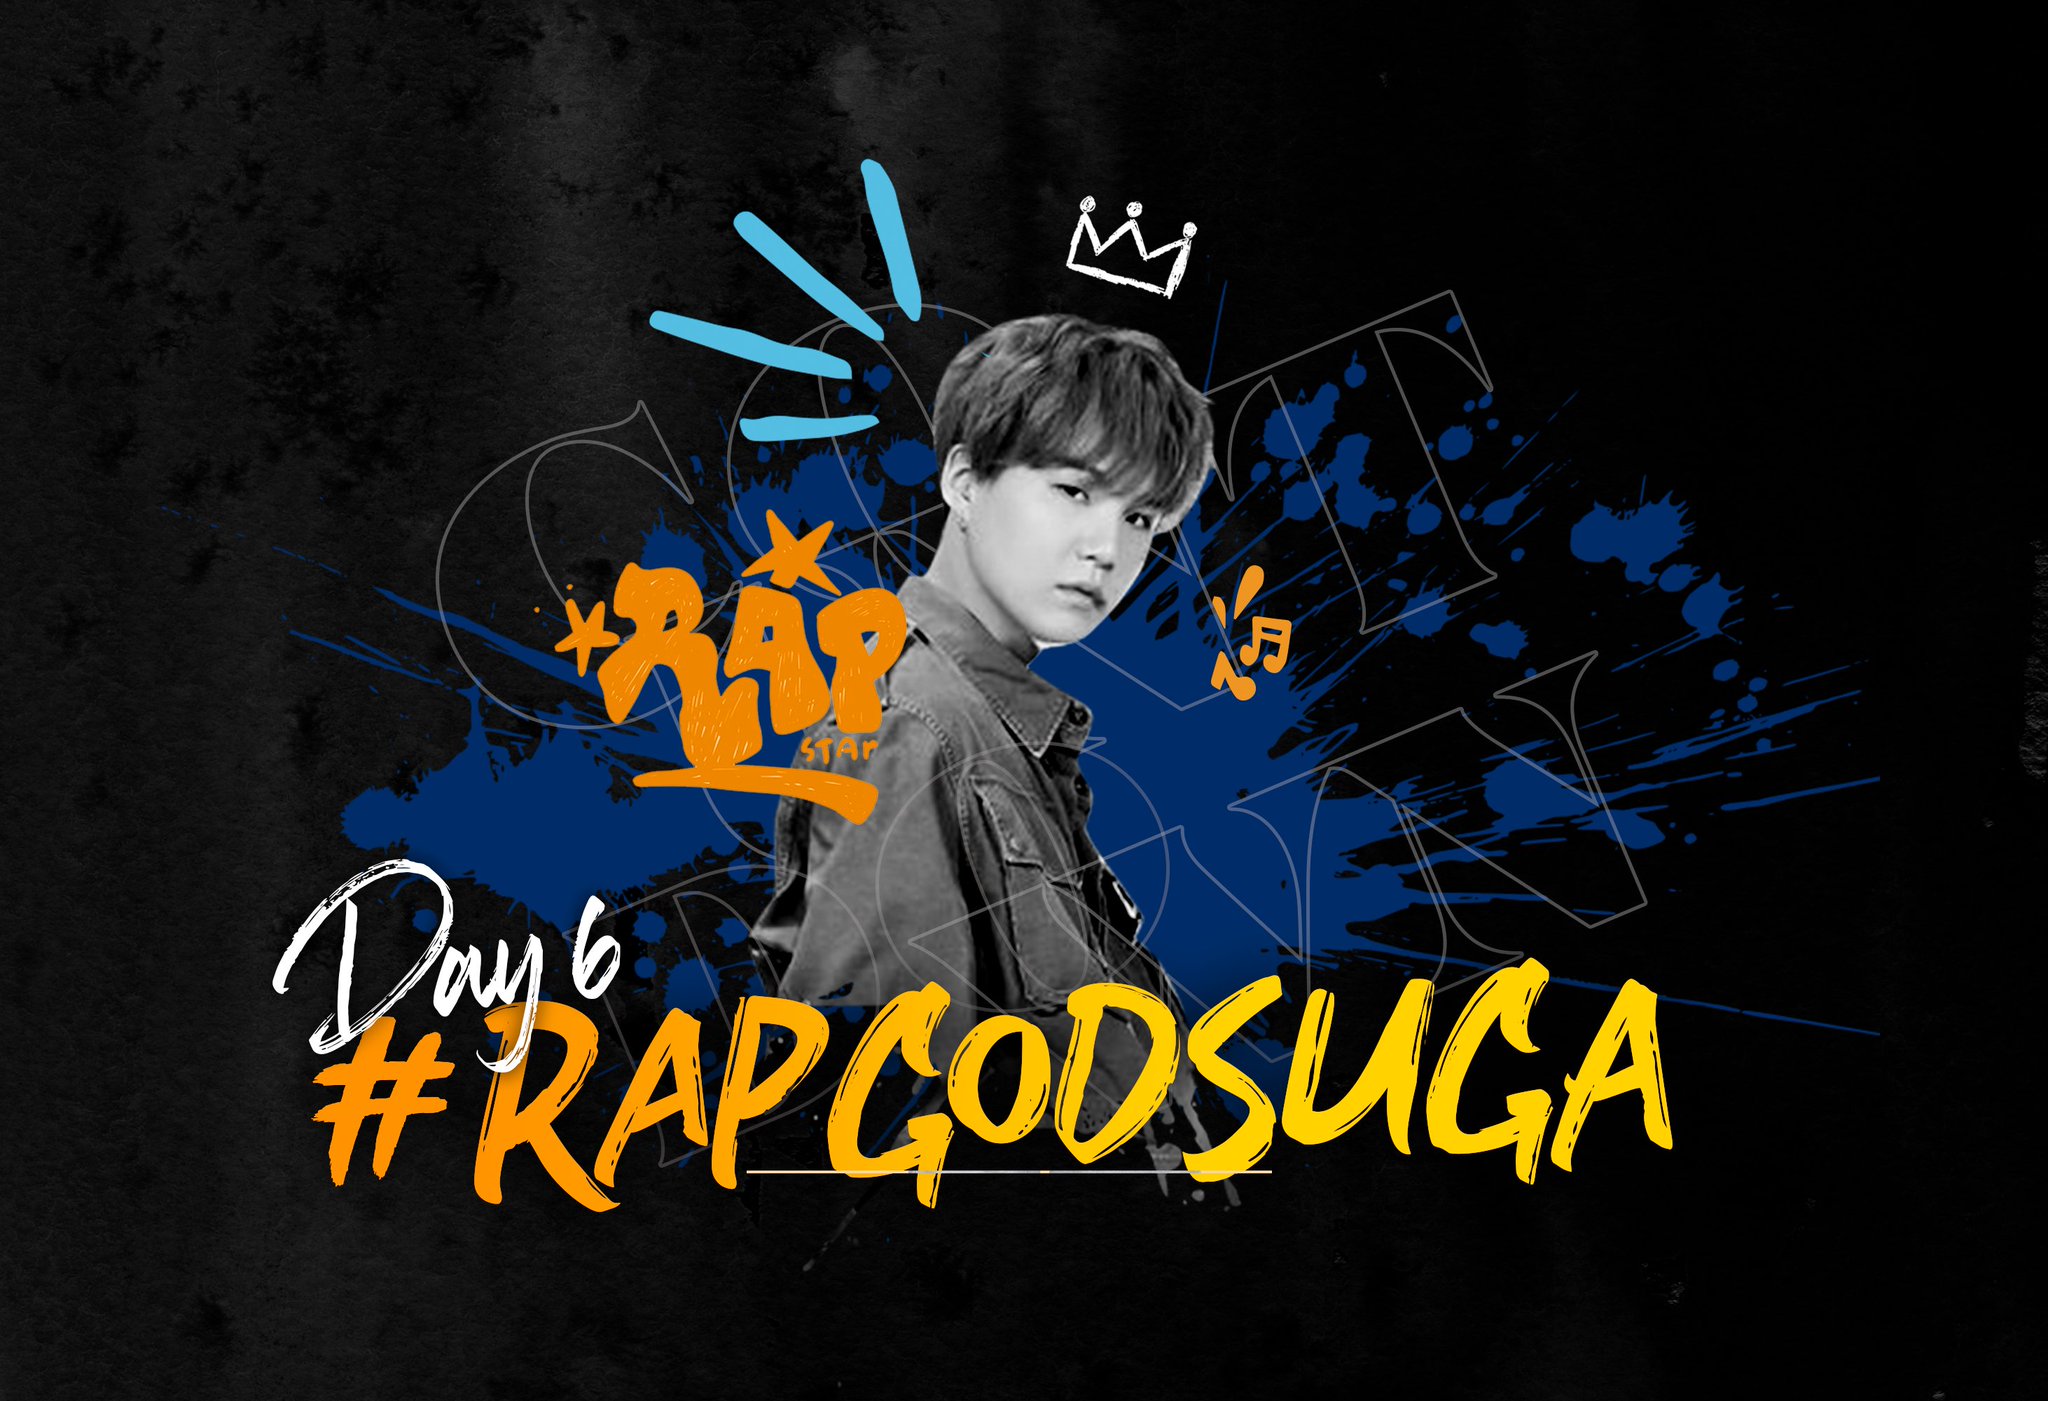 Rap God SUGA (hashtag to celebrate SUGA's rap skills)